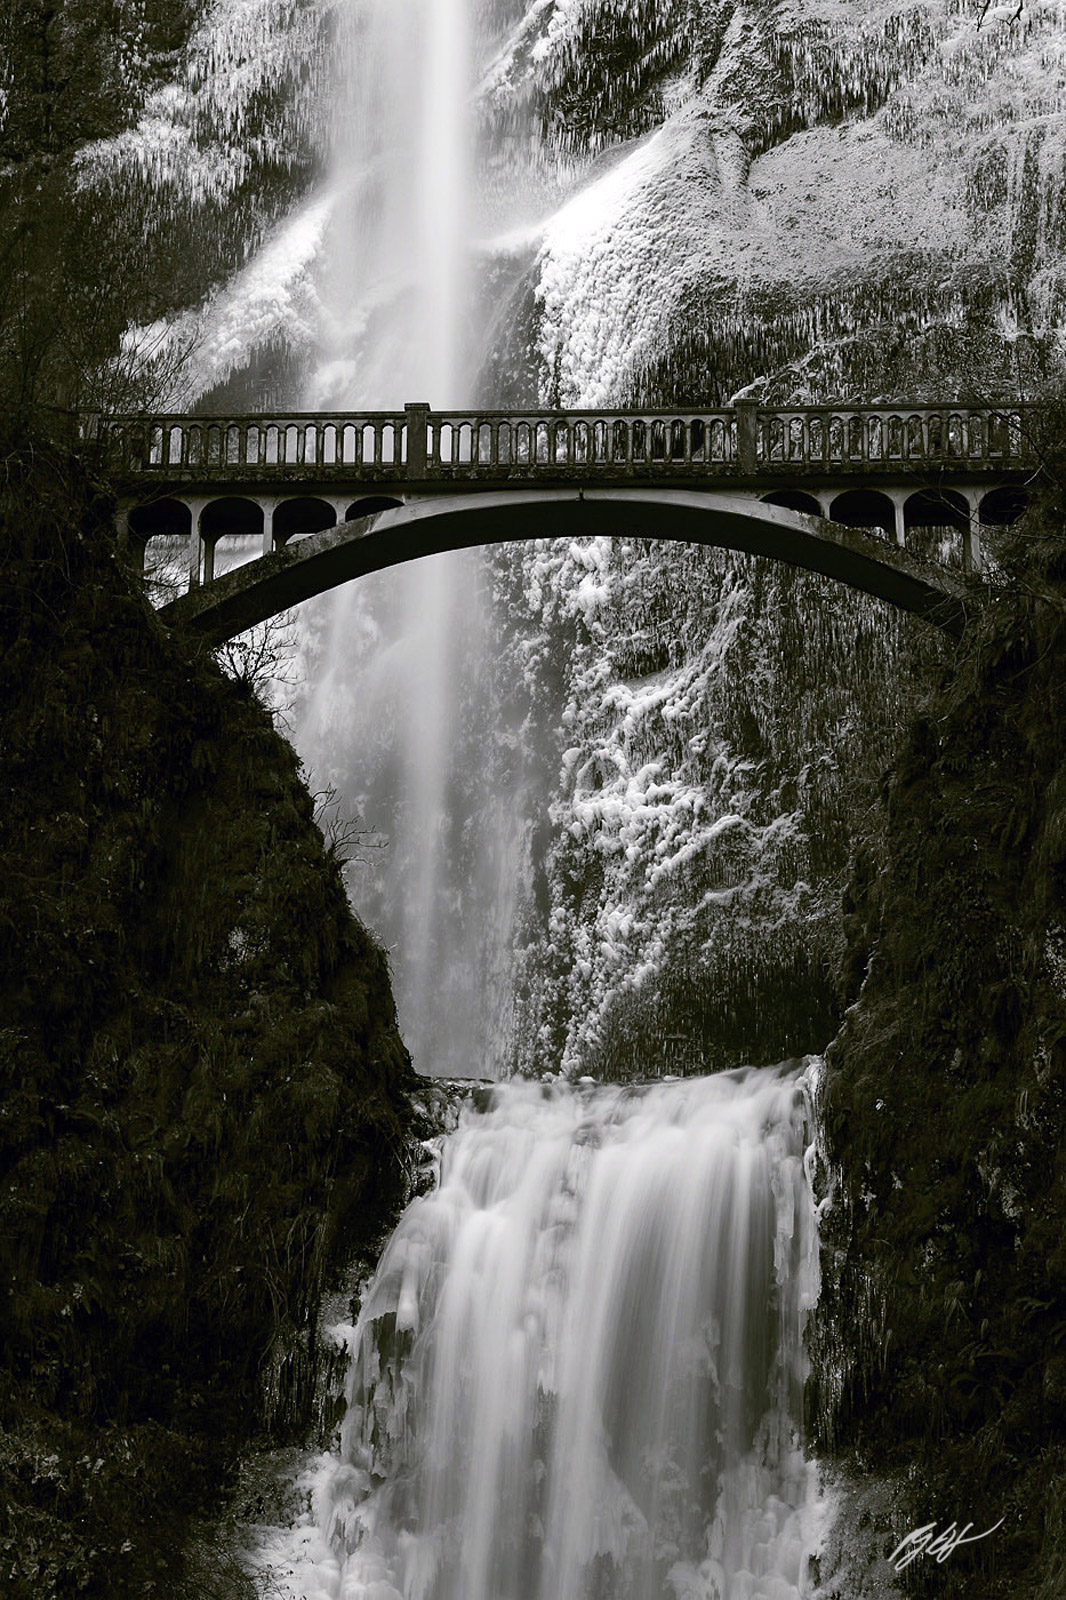 Winter Scene and the Multnomah Falls Hiker Bridge in the Columbia River Gorge in Oregon